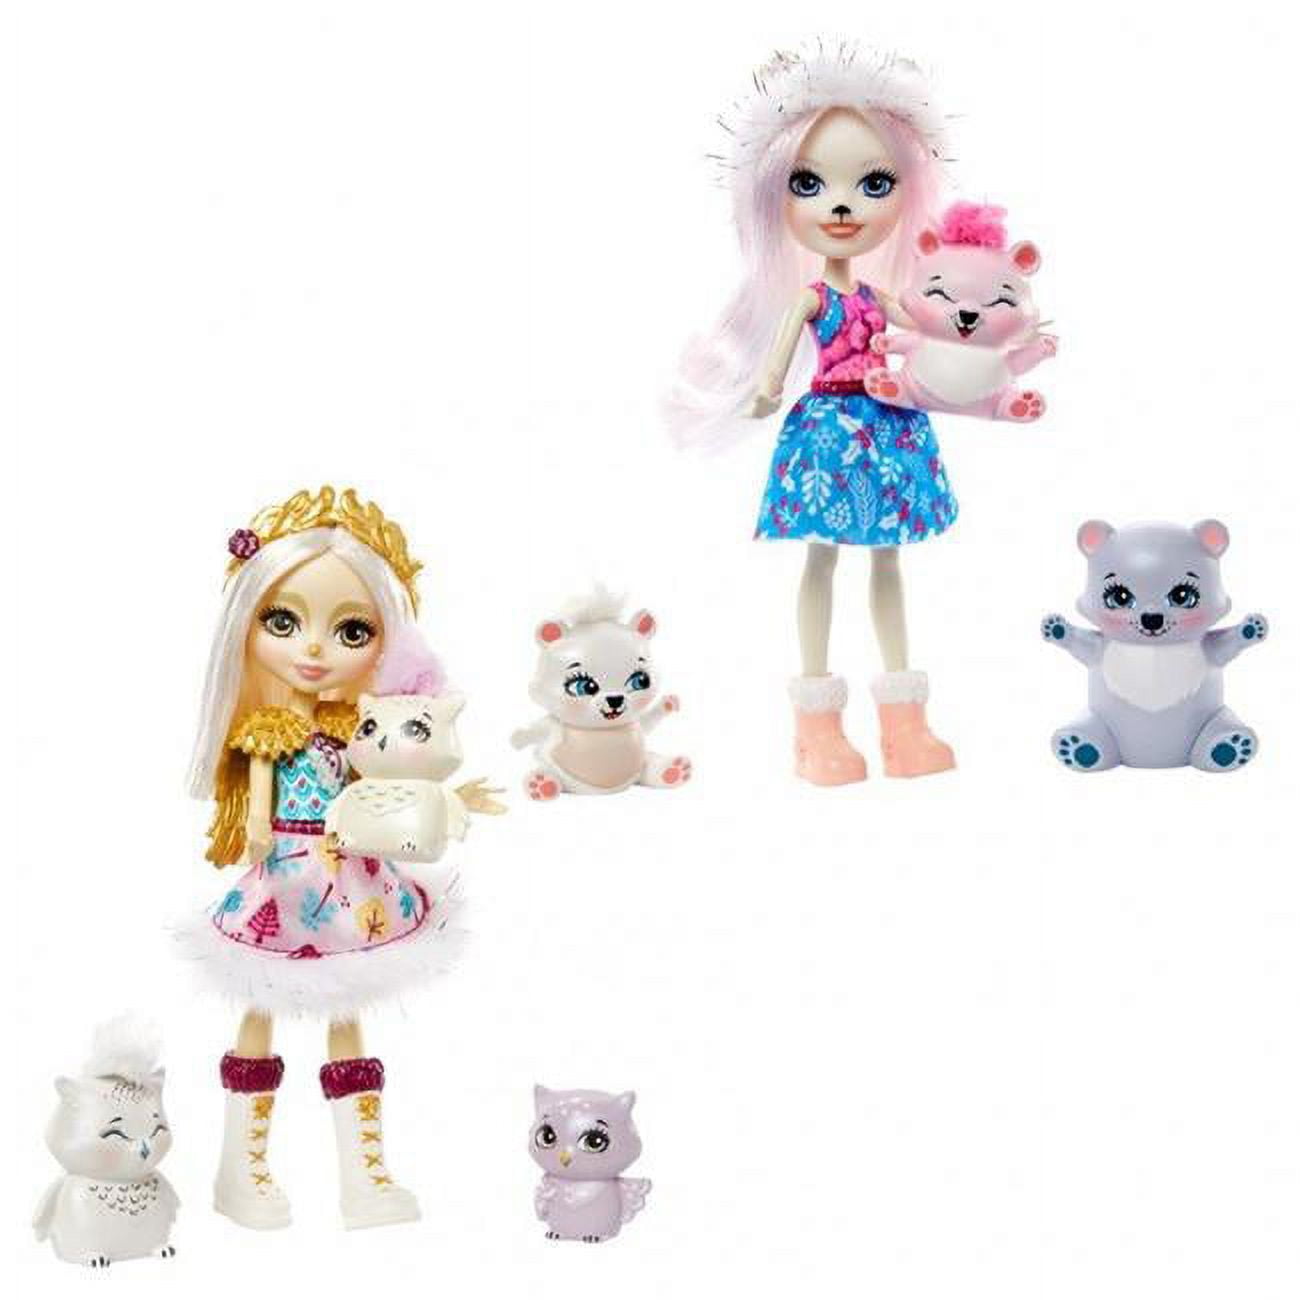 Mattel MTTGJX43 Enchantimals Family Toys Assortment - 4 Piece